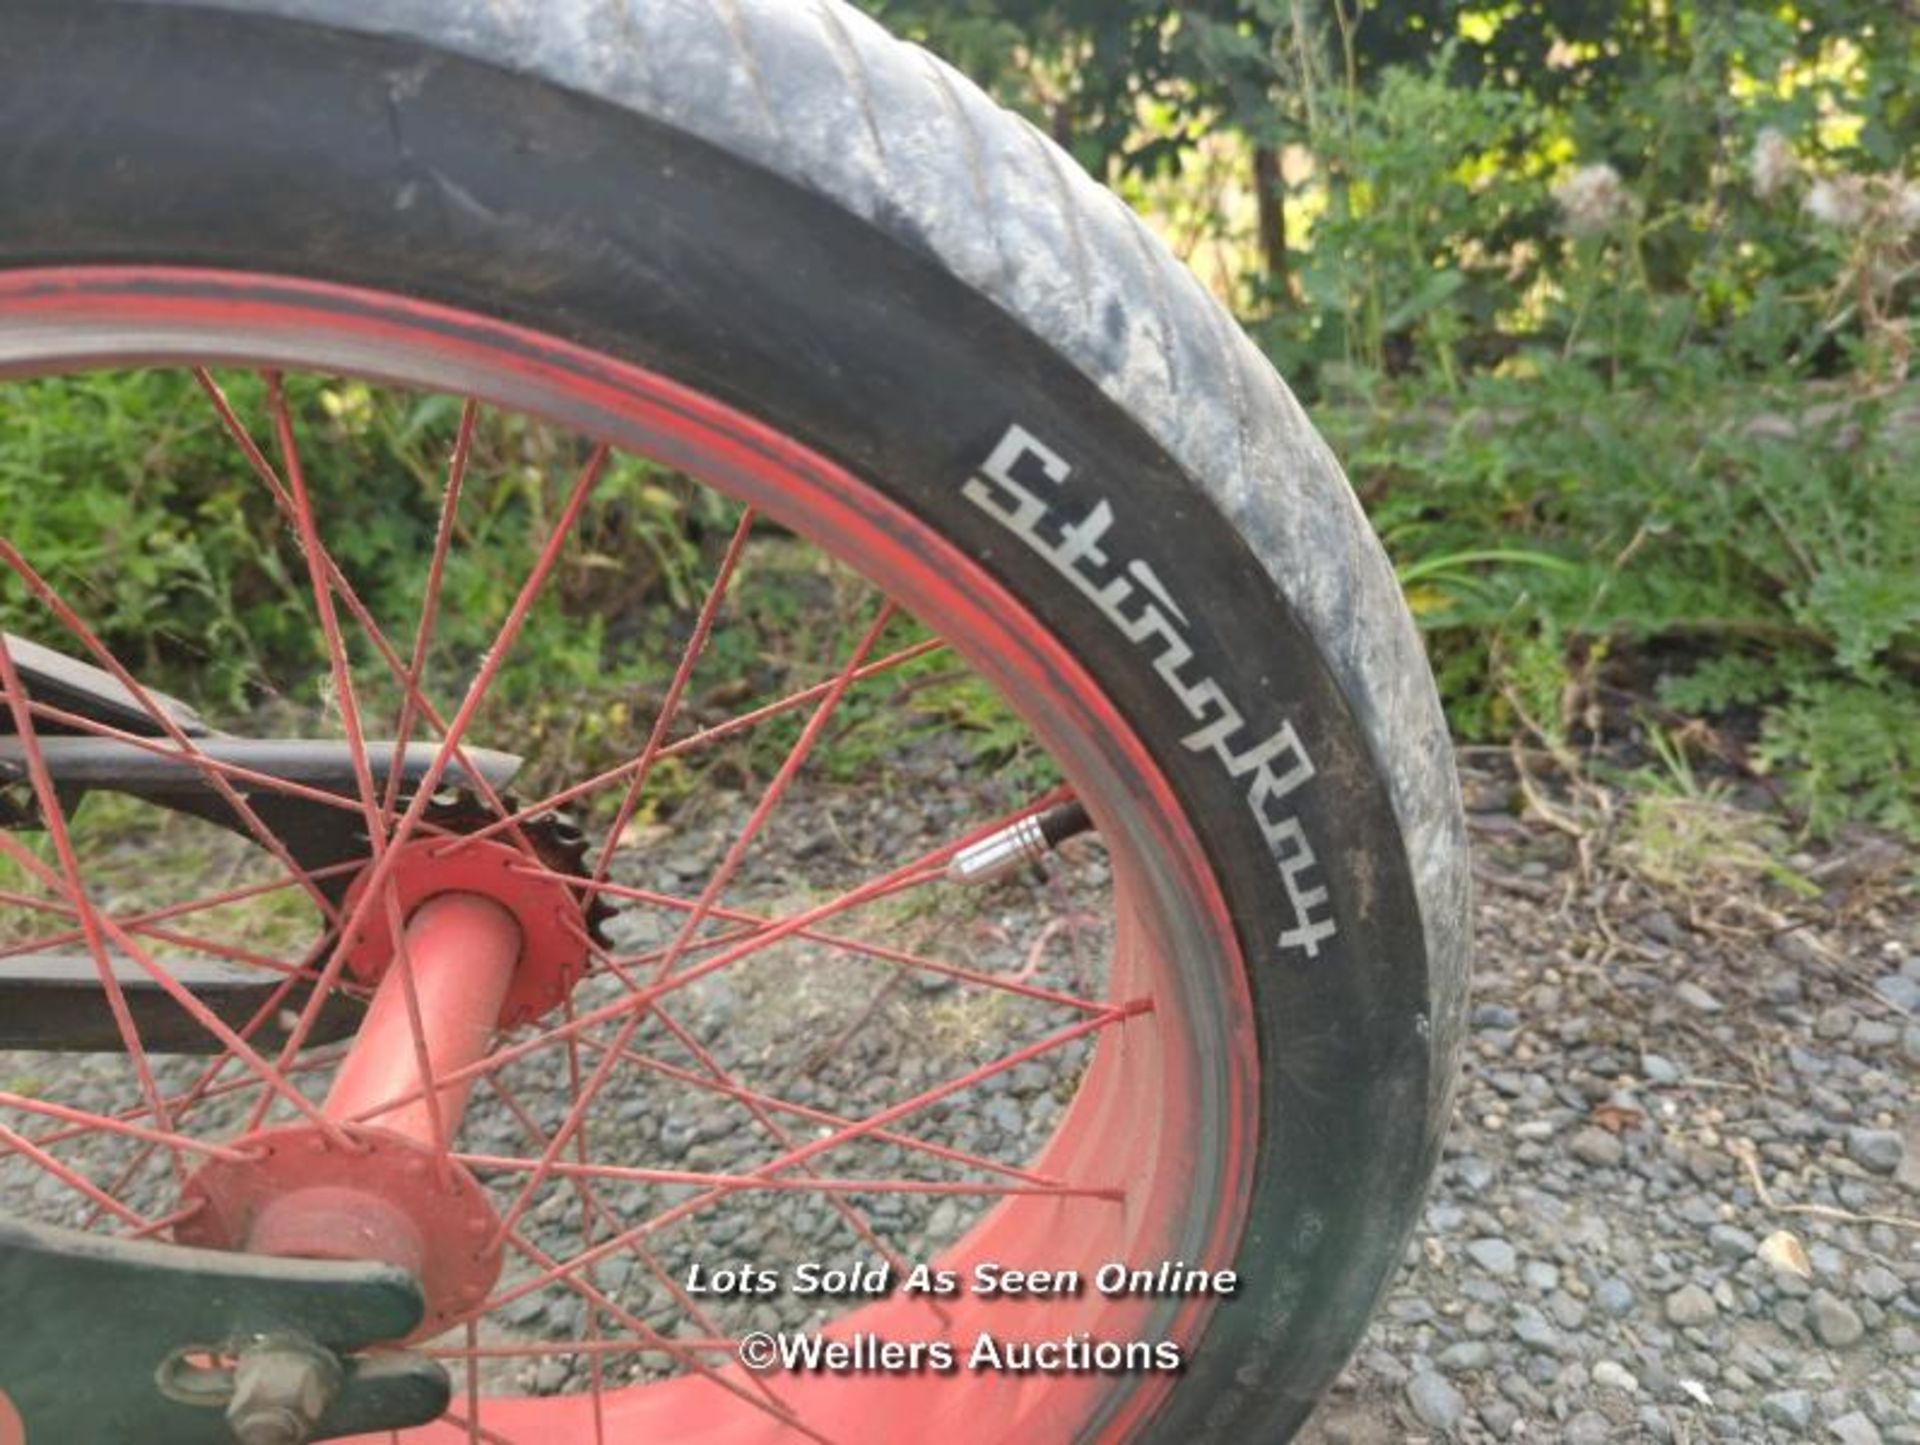 Schwinn stingray bike for restoration. Was custom painted. Chain broken and in bag. Seat needs - Image 3 of 6